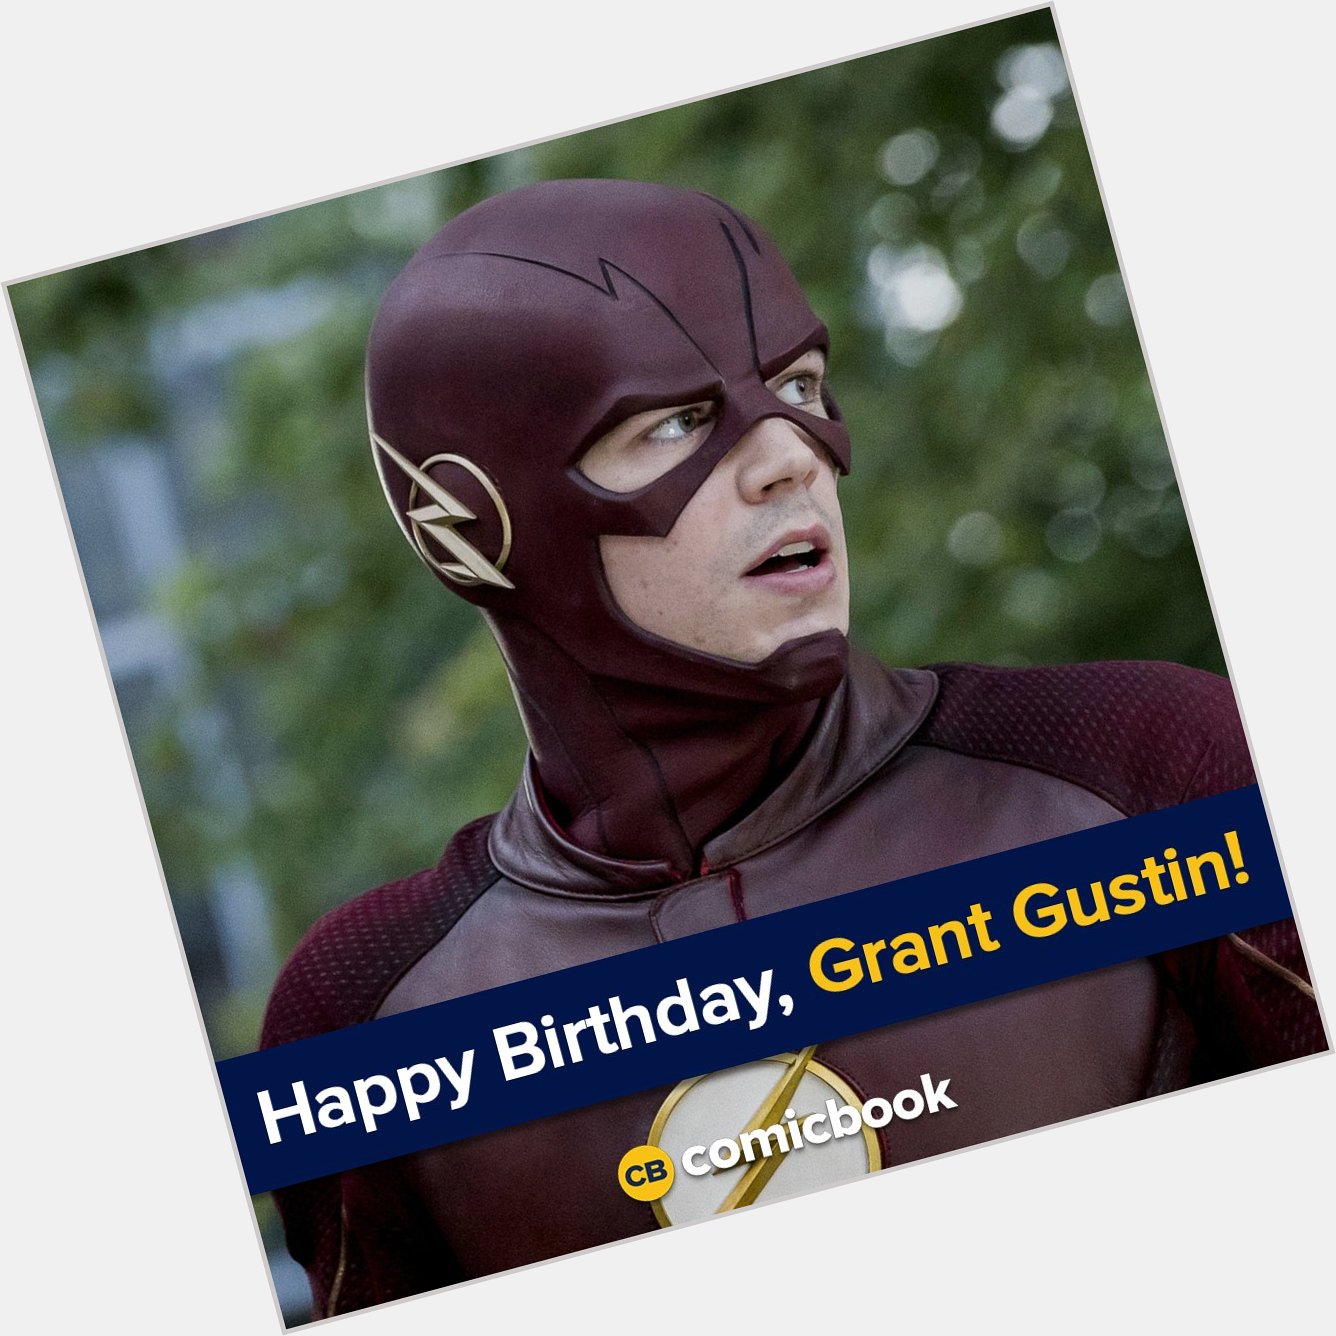 Happy birthday to star Grant Gustin! 